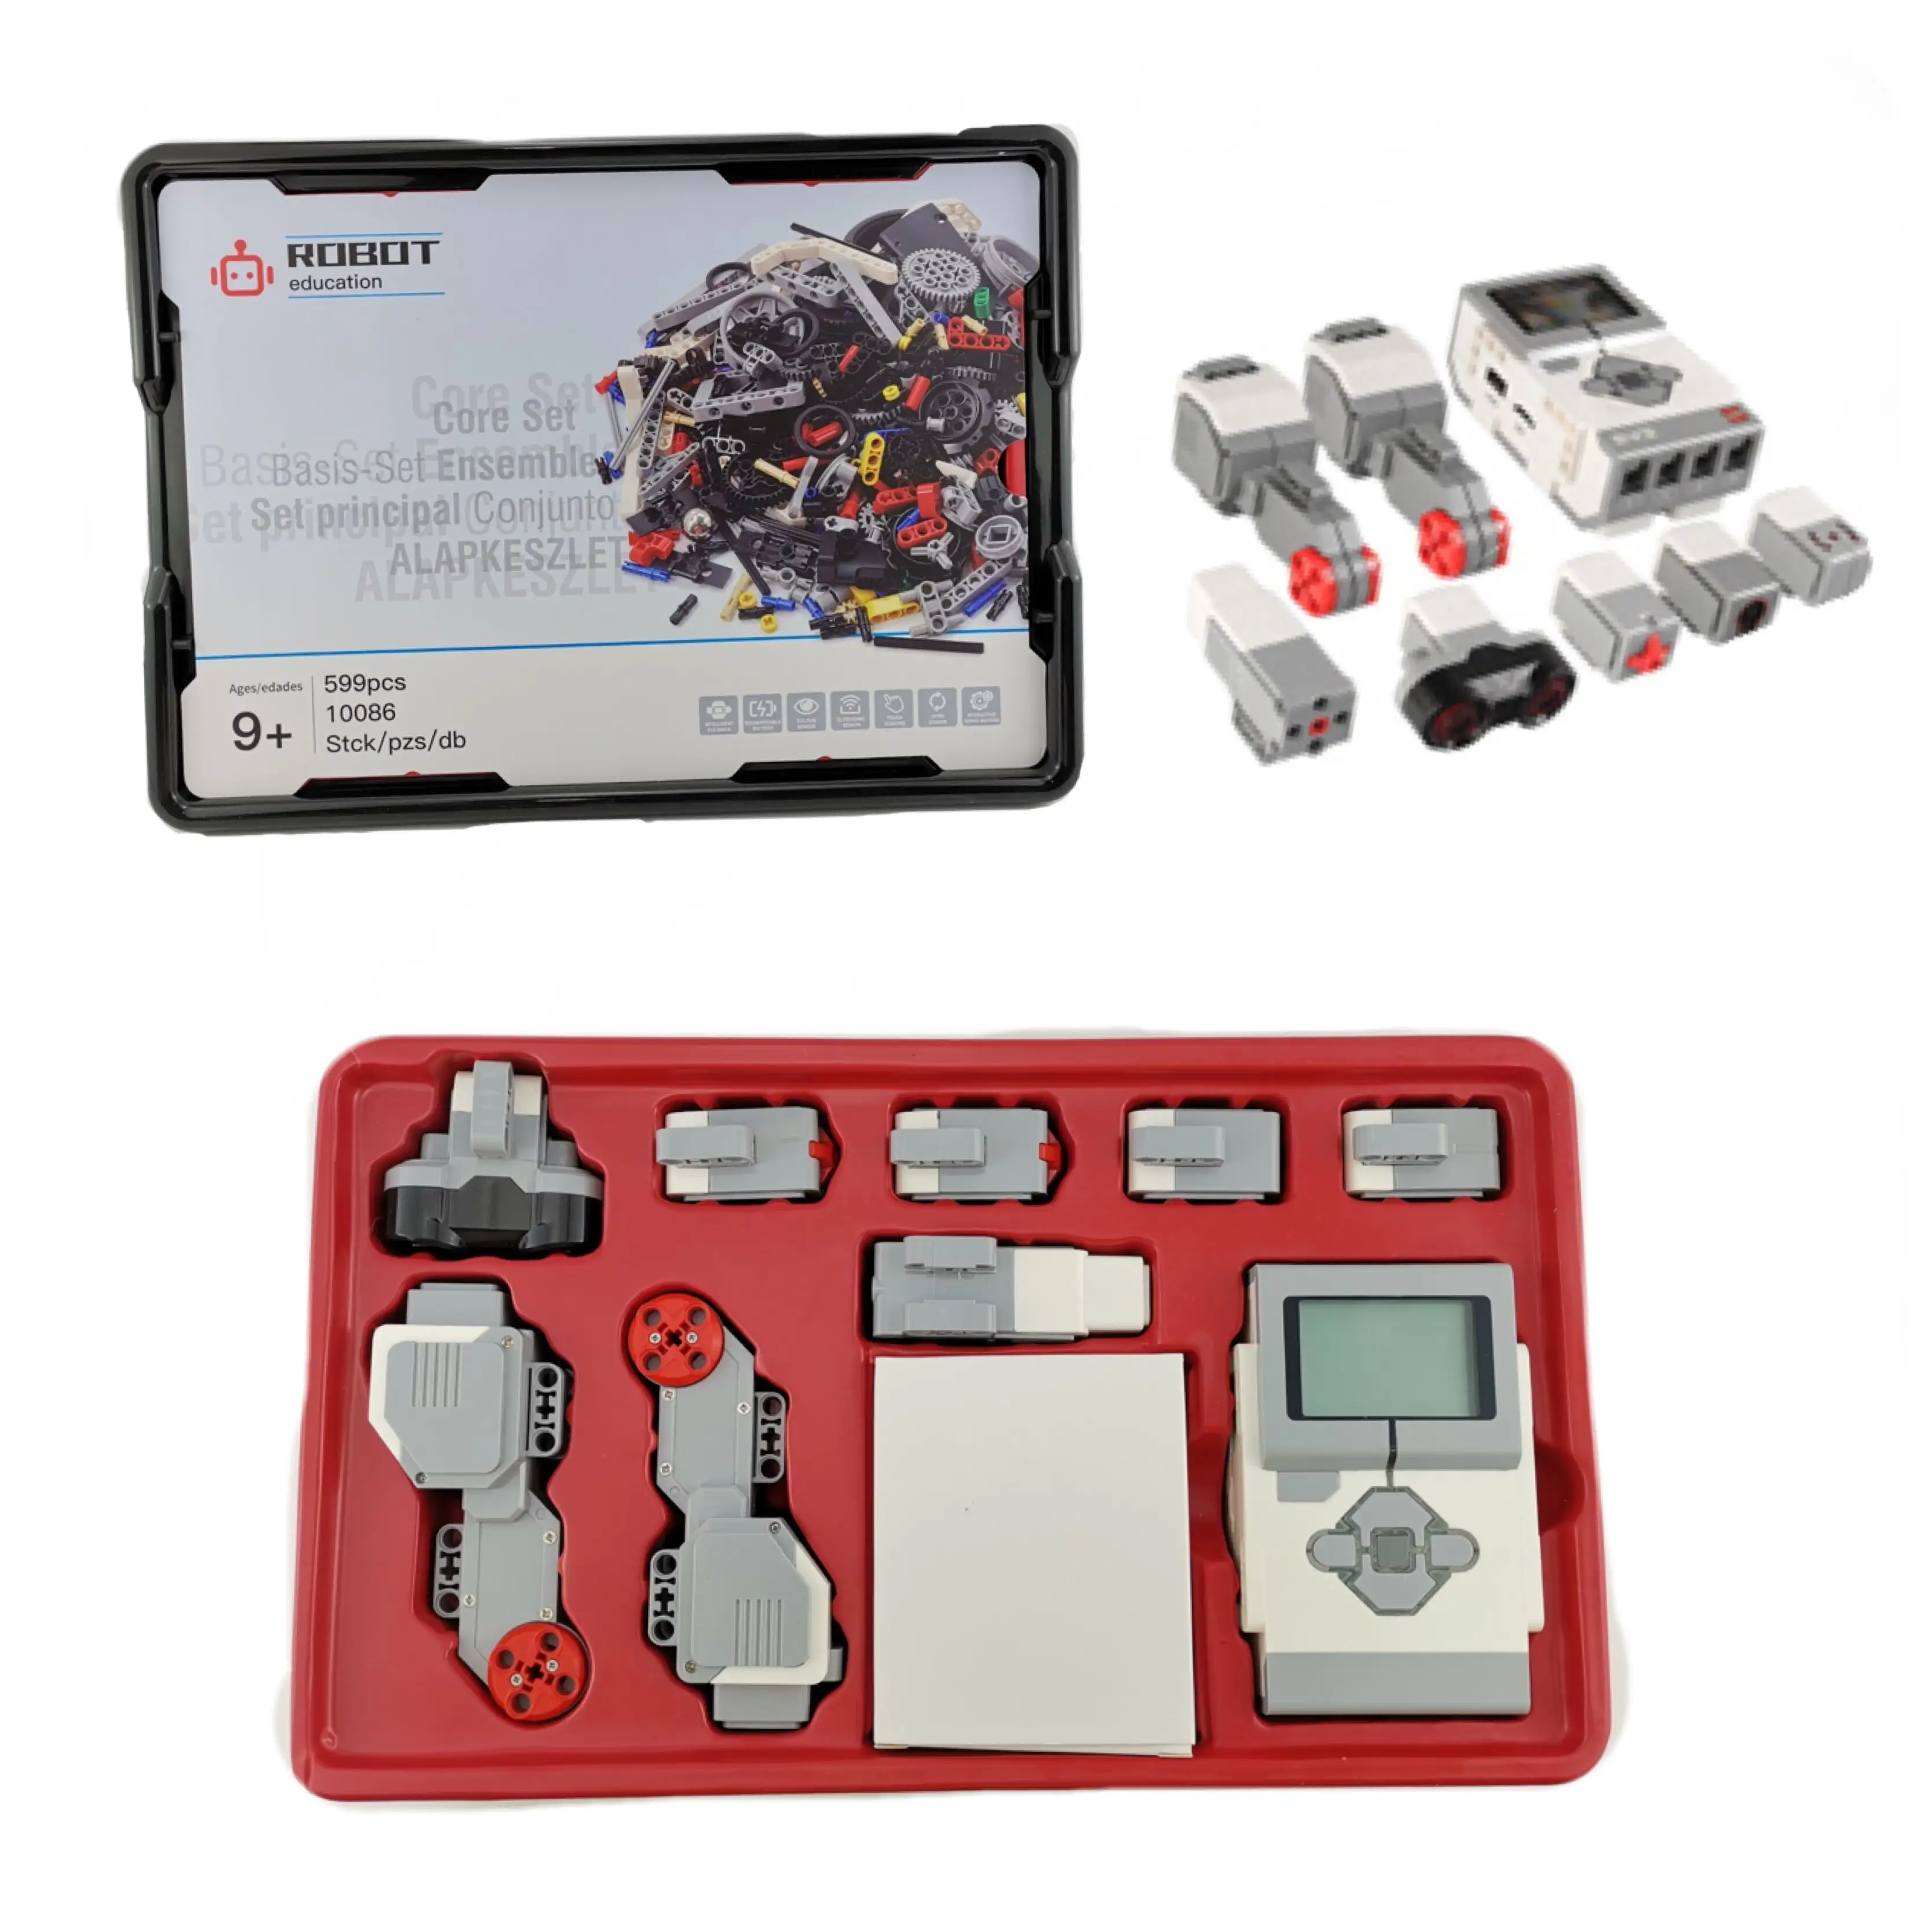 Ev3 basic set No.45544 Robot Kit Toys Diy Eletronic Programmable Blocks Kids Educational kit ev3 no45544